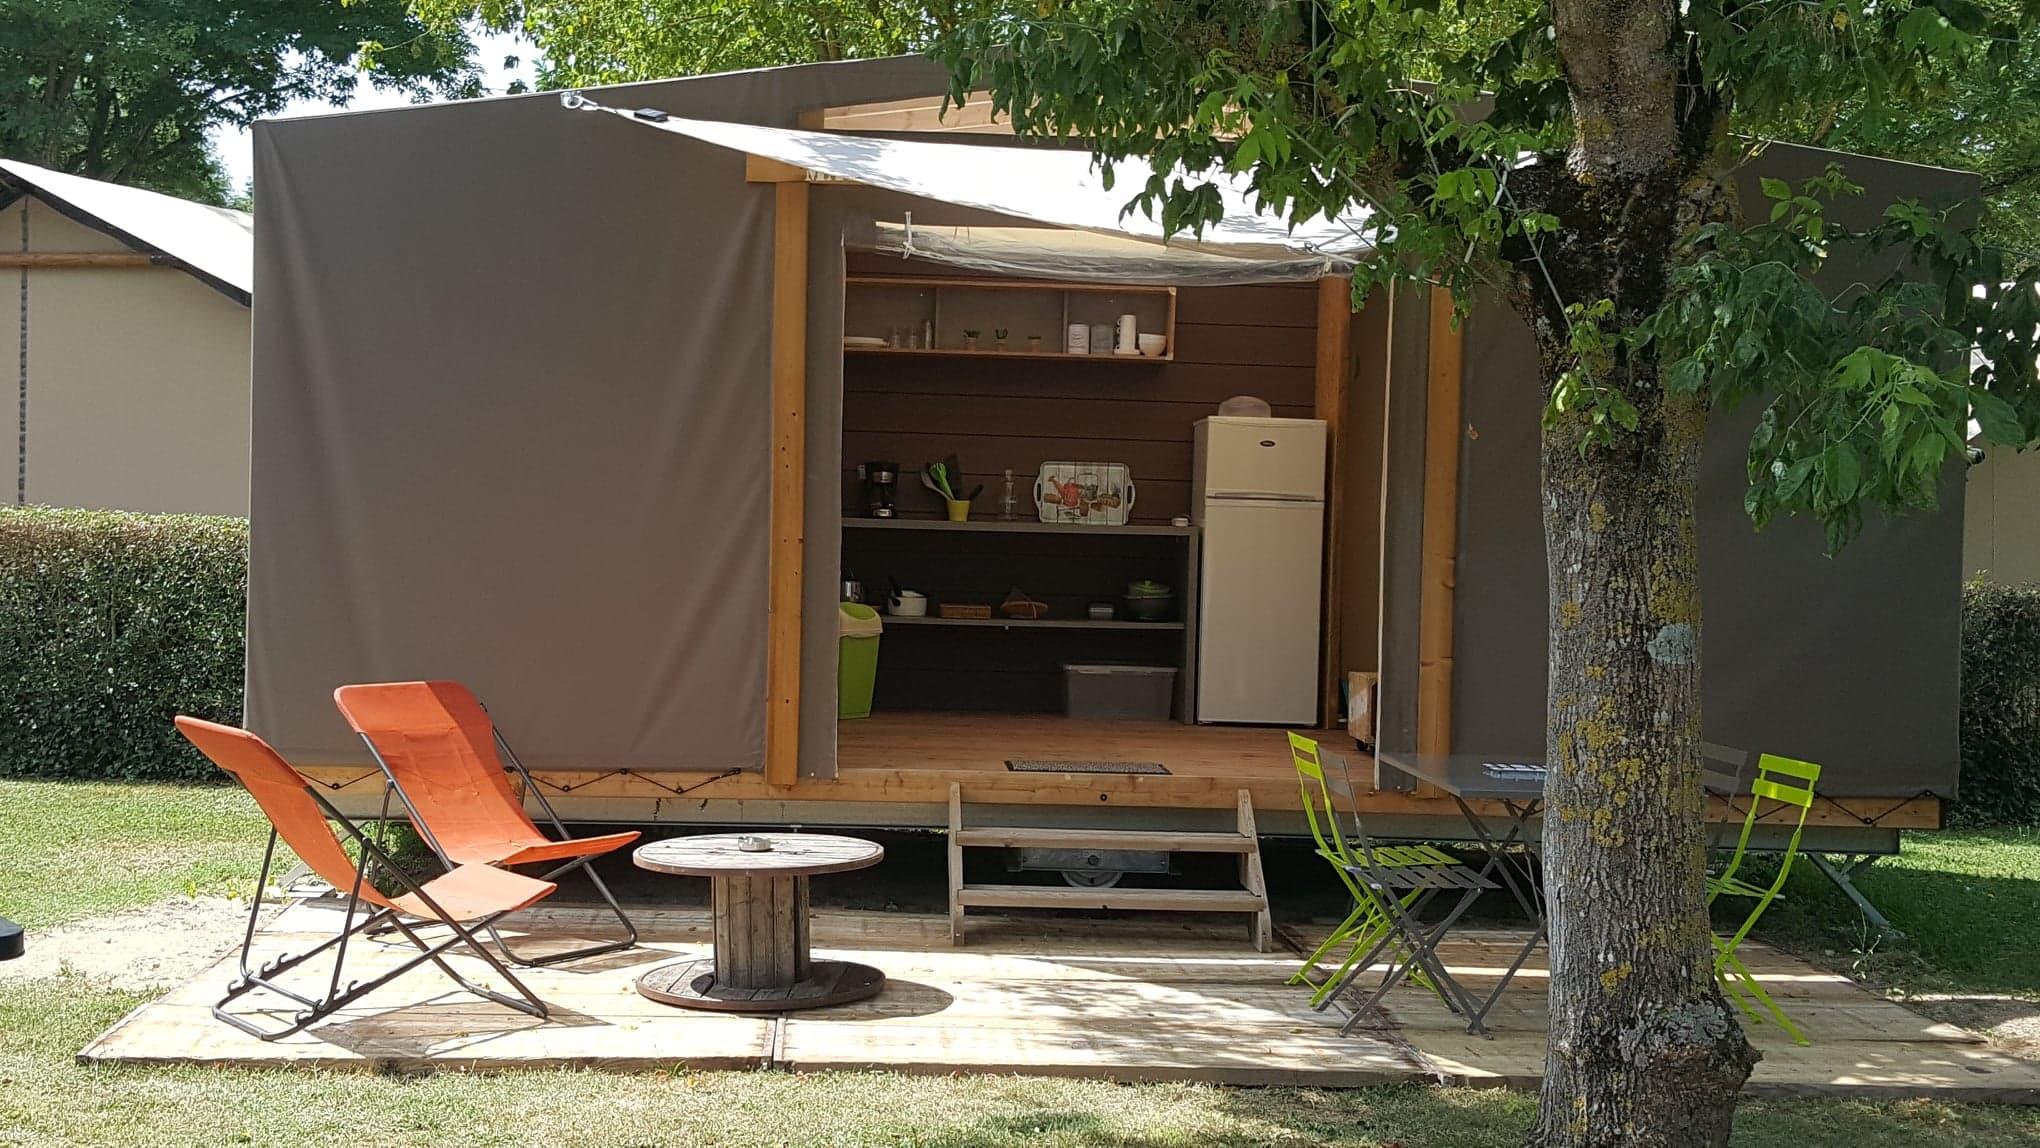 Huuraccommodatie - Bungalow Maori Confort 17M² 2 Kamers (Zonder Sanitair) - Flower Camping Le Château